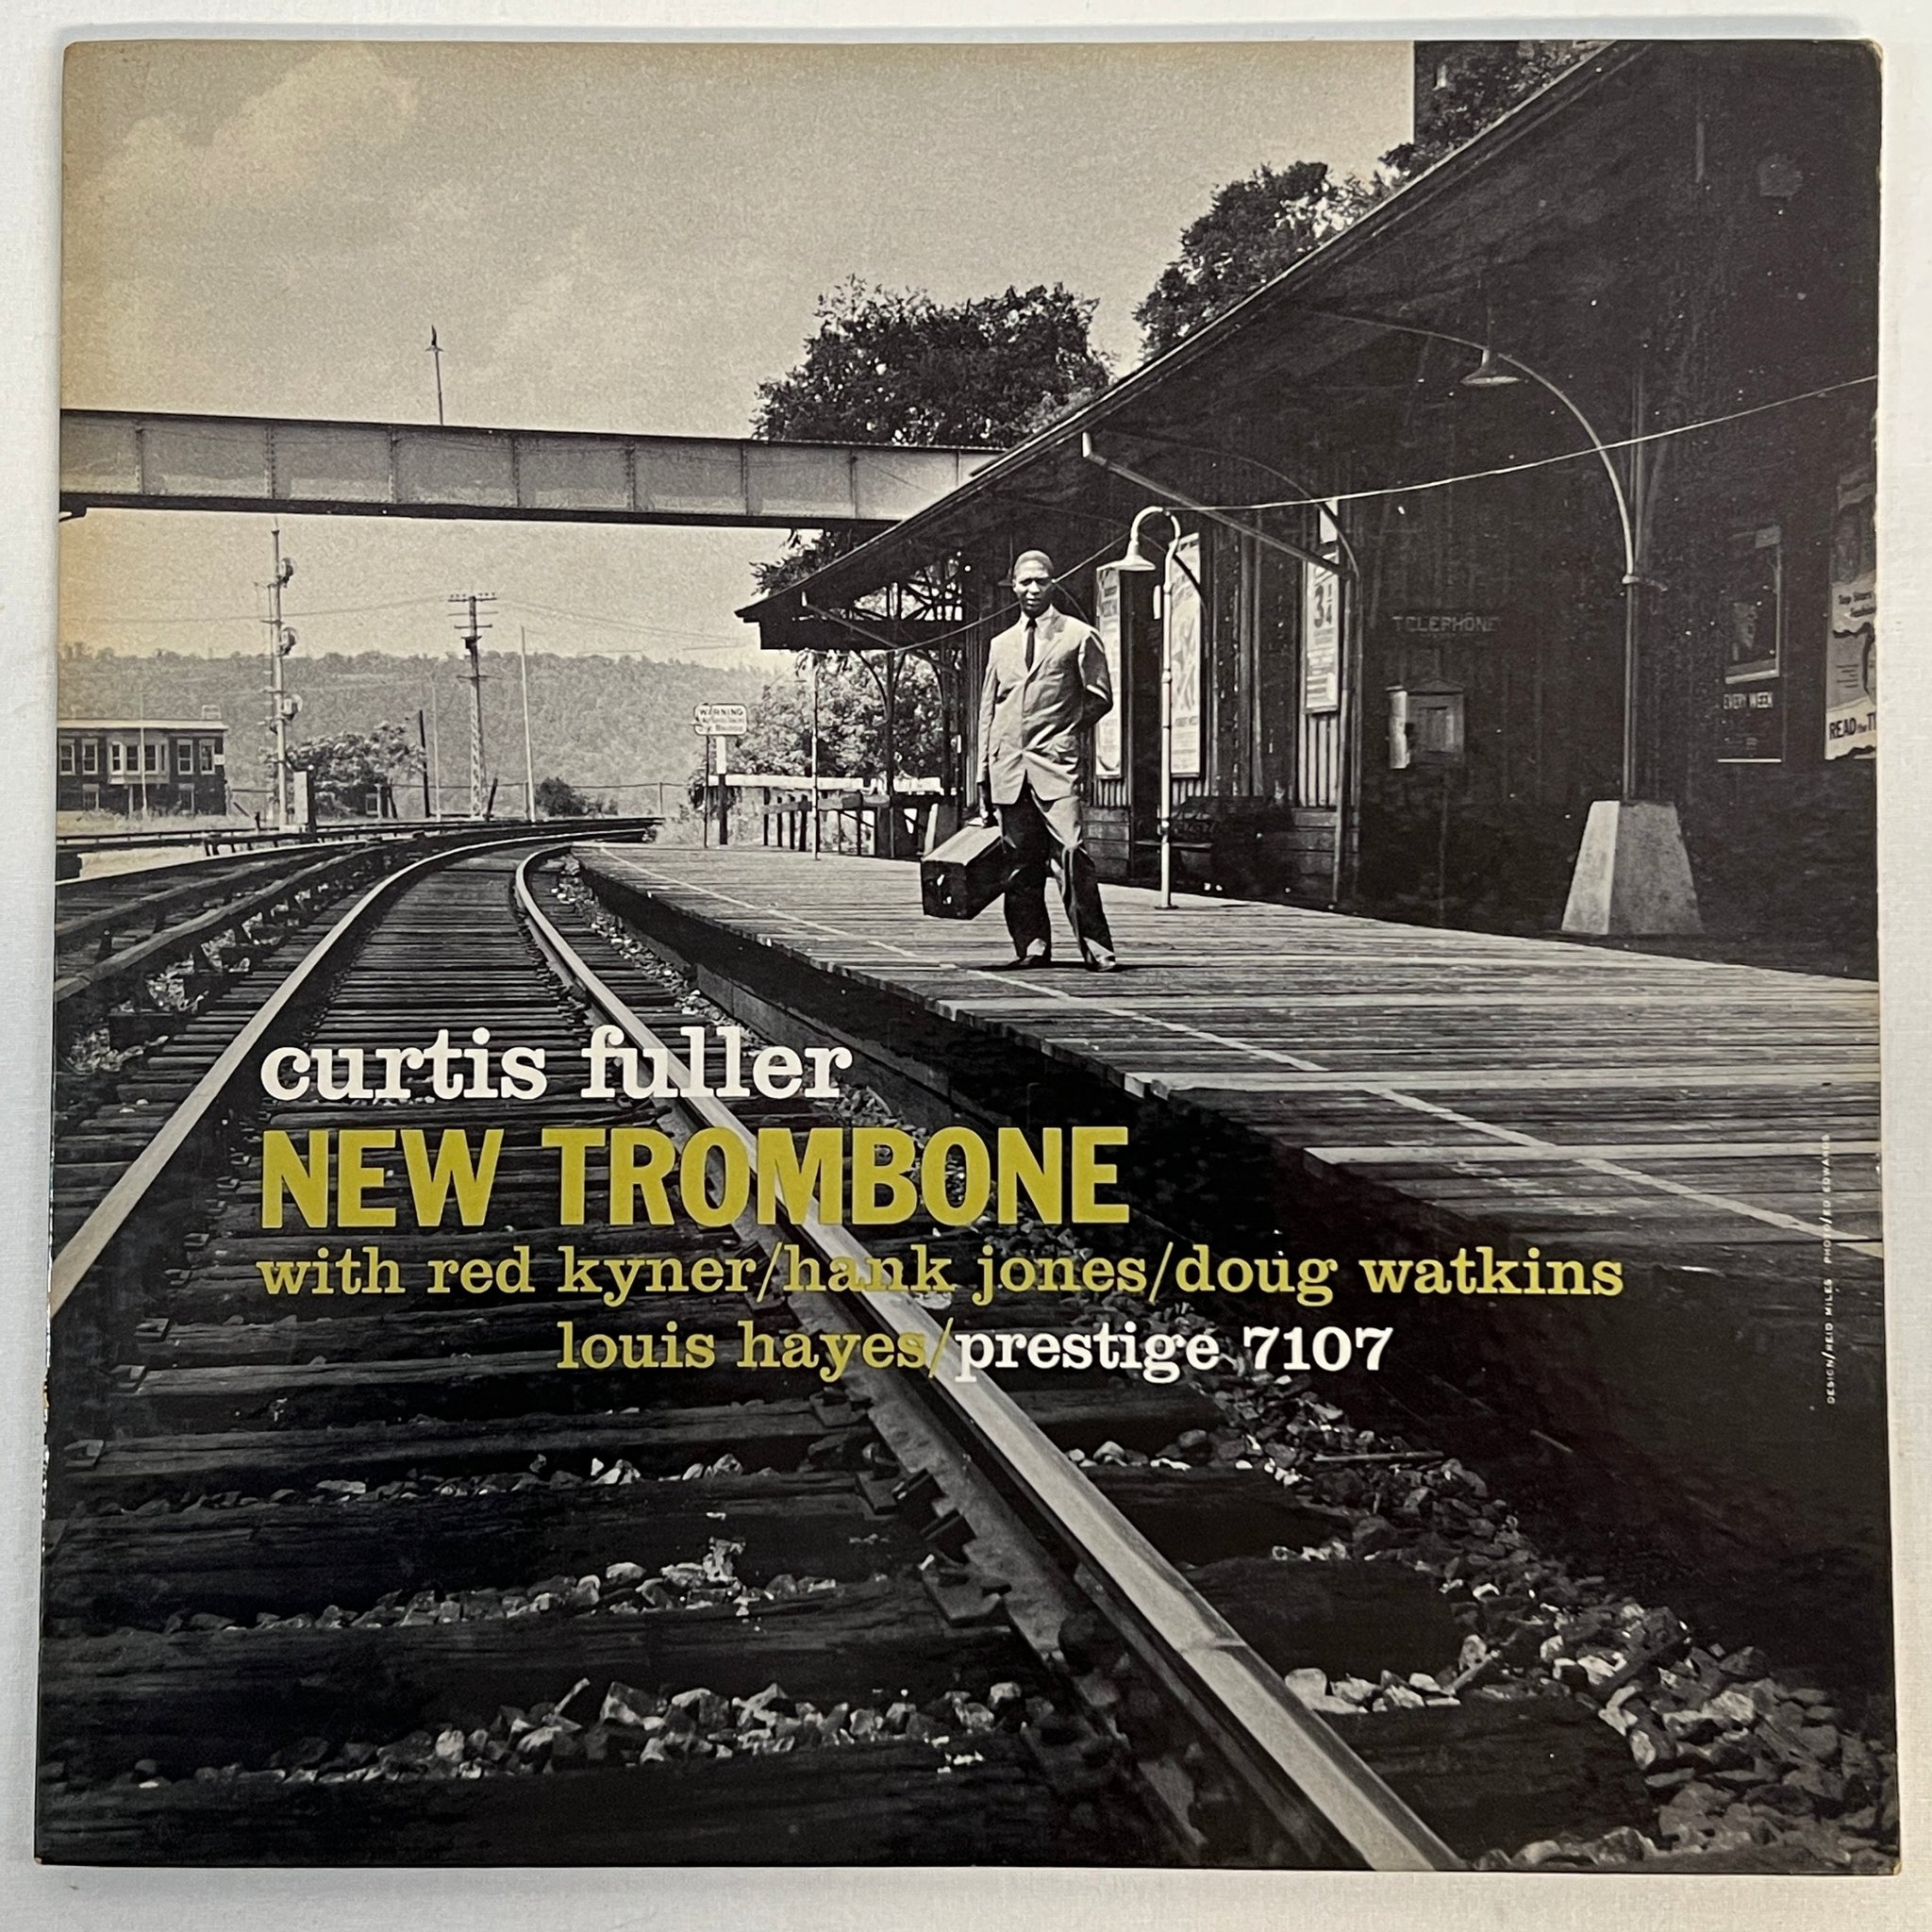 Omslagsbild för skivan CURTIS FULLER new trombone LP -57 US PRESTIGE PRLP 7107 orig press ** RARE **